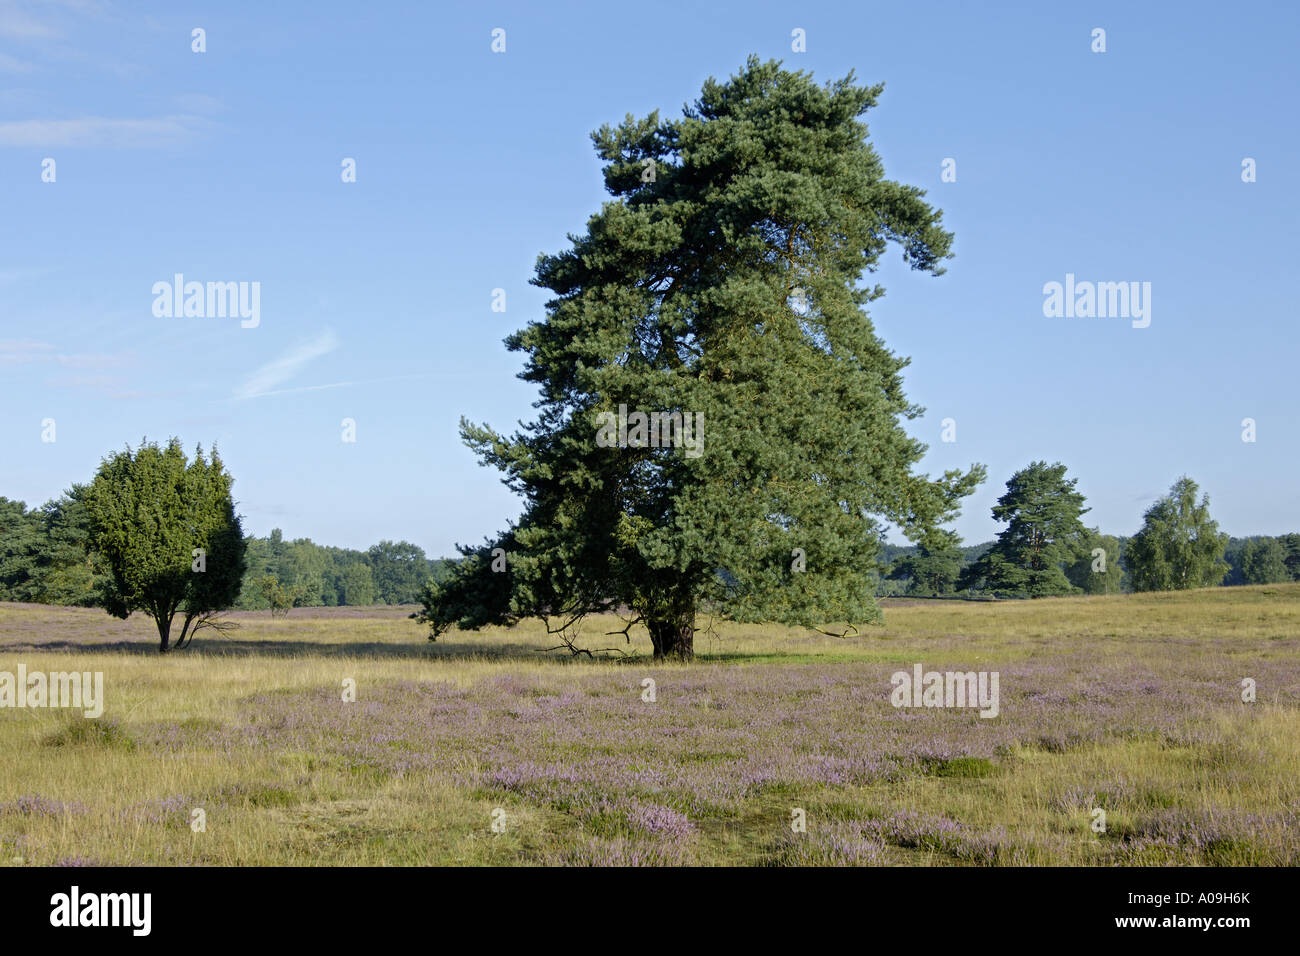 Scotch pine, scots pine (Pinus sylvestris), single tree with flowering heath, Calluna vulgaris, Germany, North Rhine-Westphalia Stock Photo